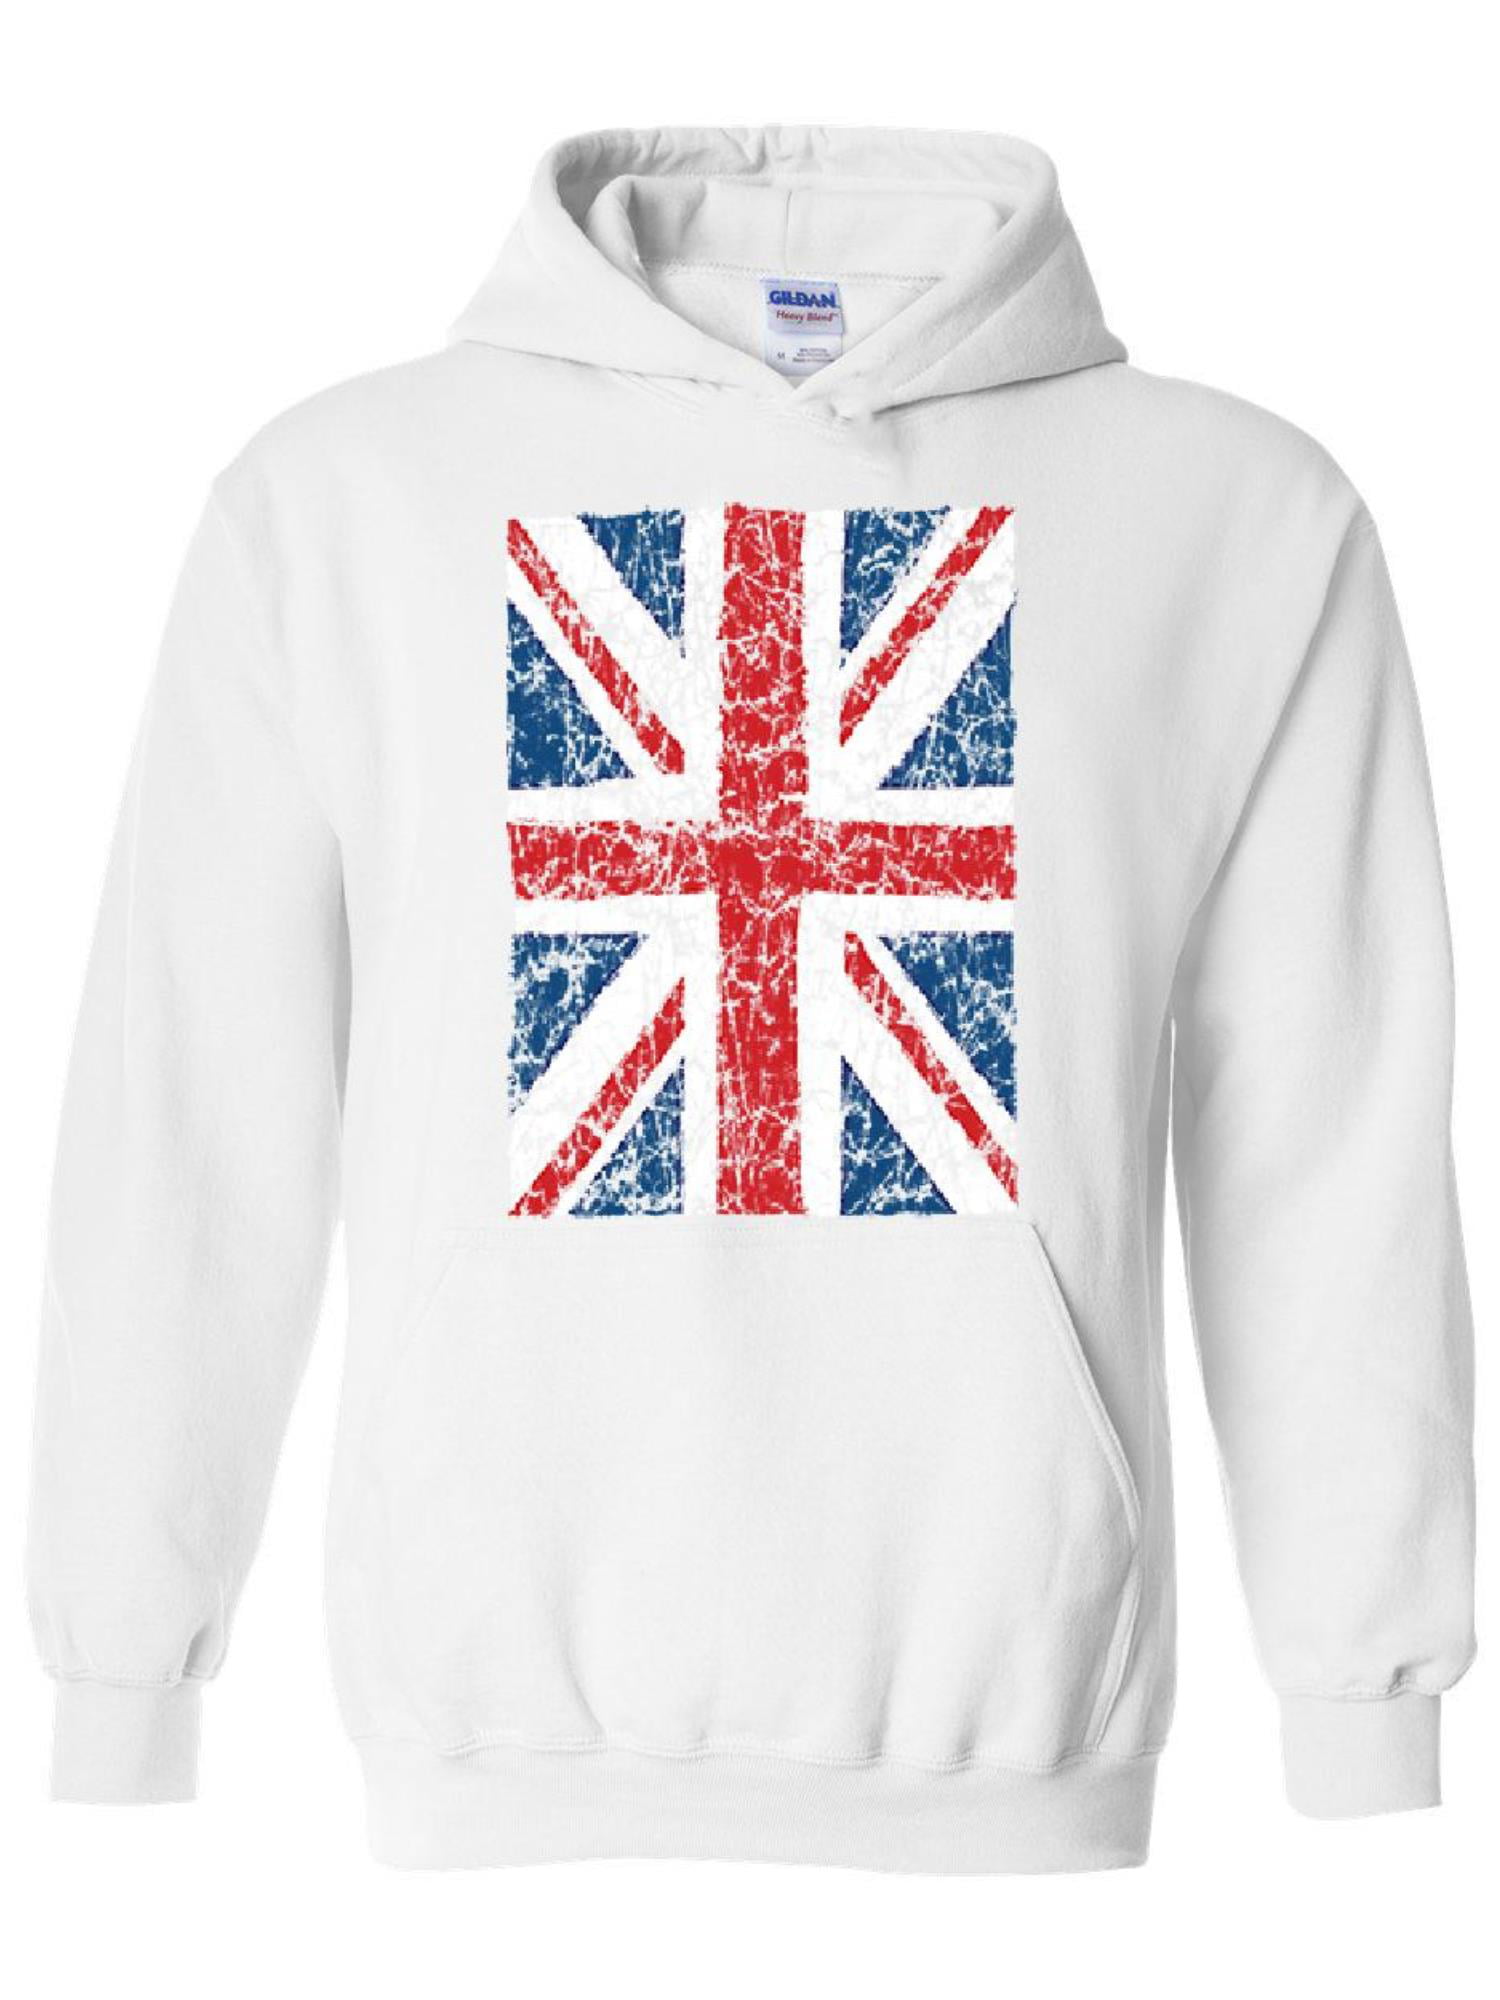 Union Jack Distressed HOODIE Sweatshirt sweater hooded British Flag England UK 